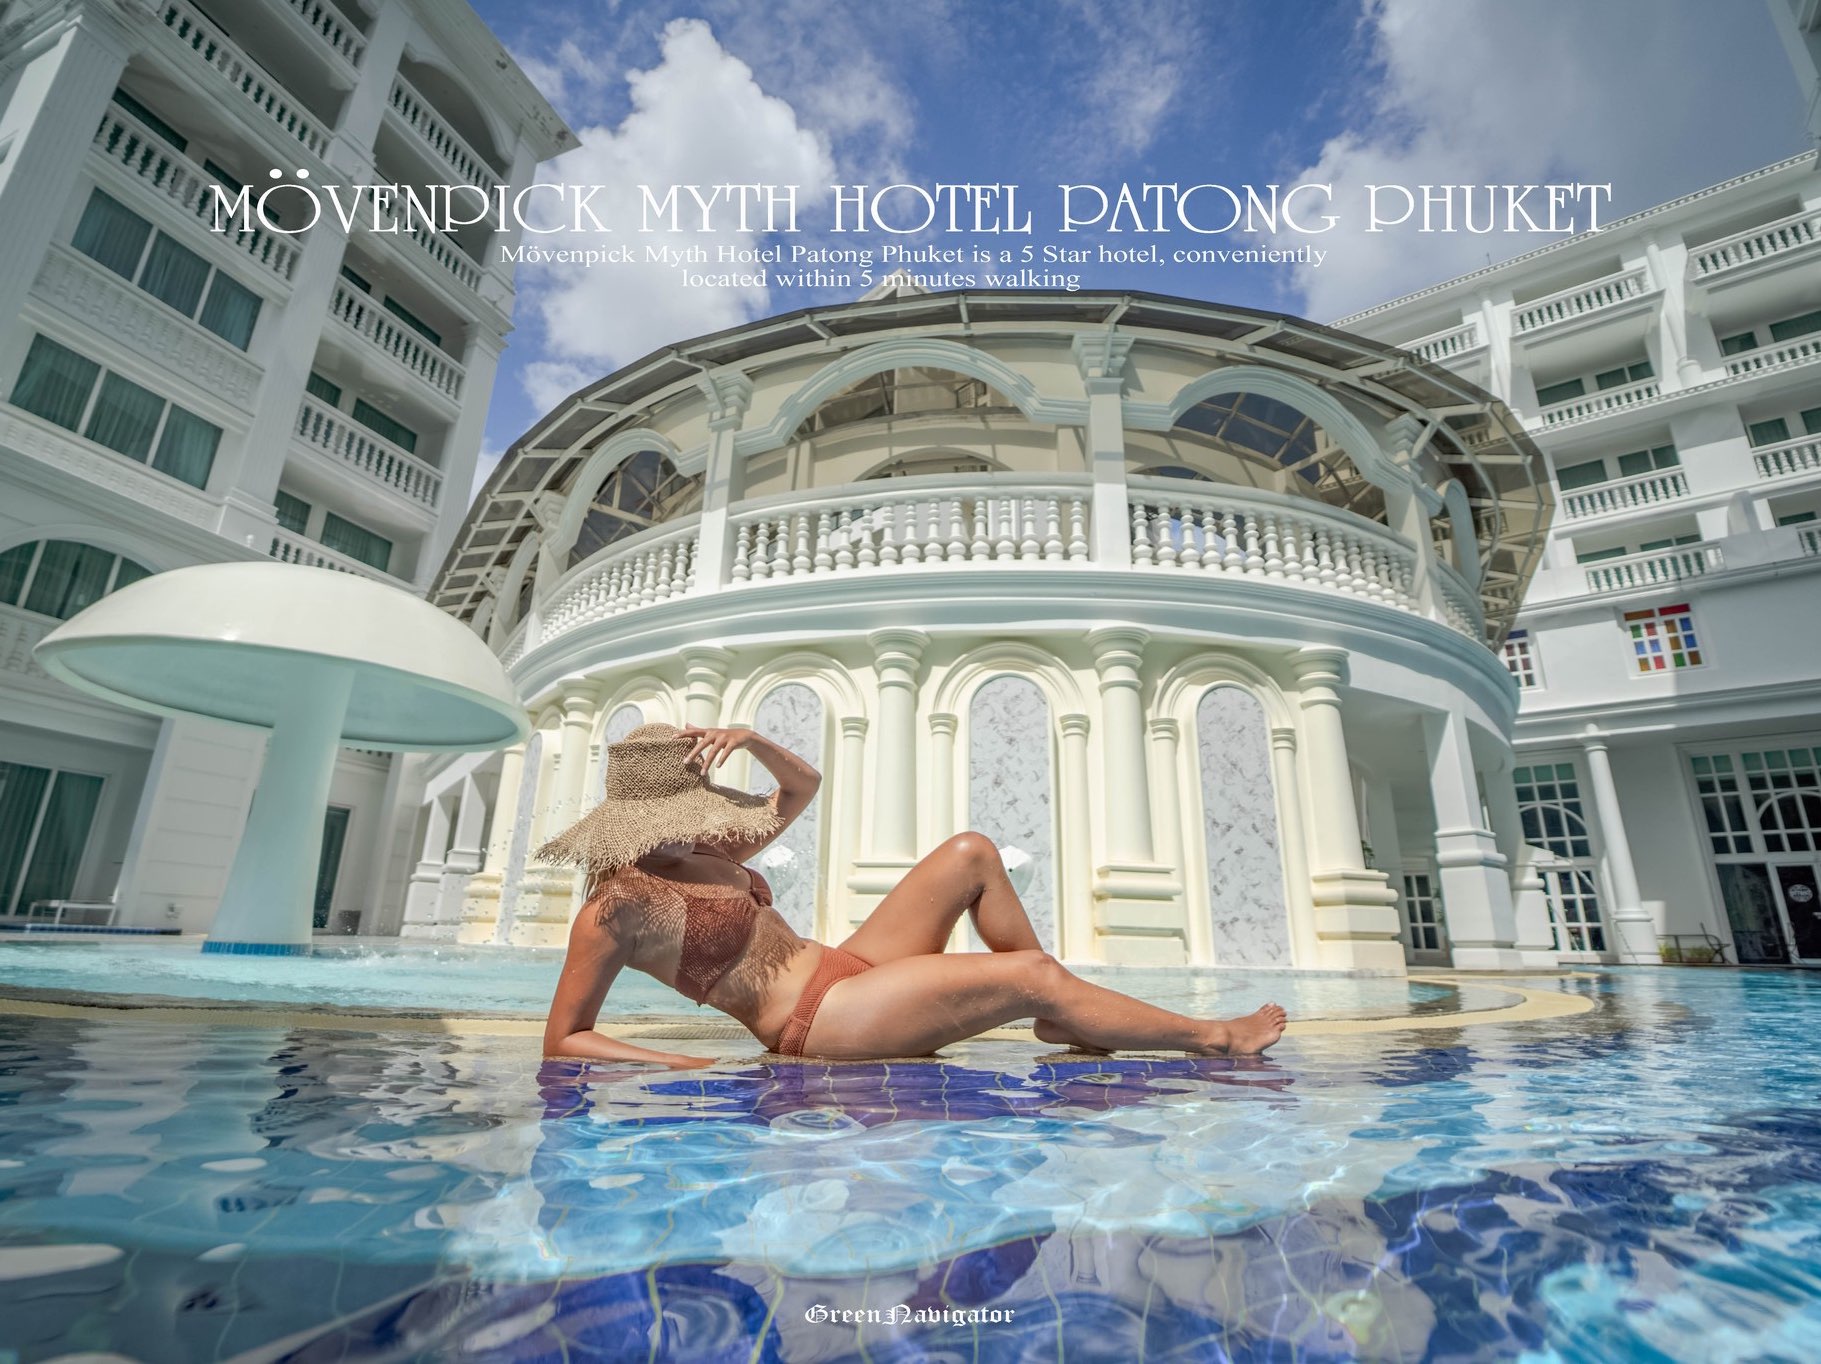 Mövenpick Myth Hotel Patong Phuket 🕌 | Trip.com ภูเก็ต